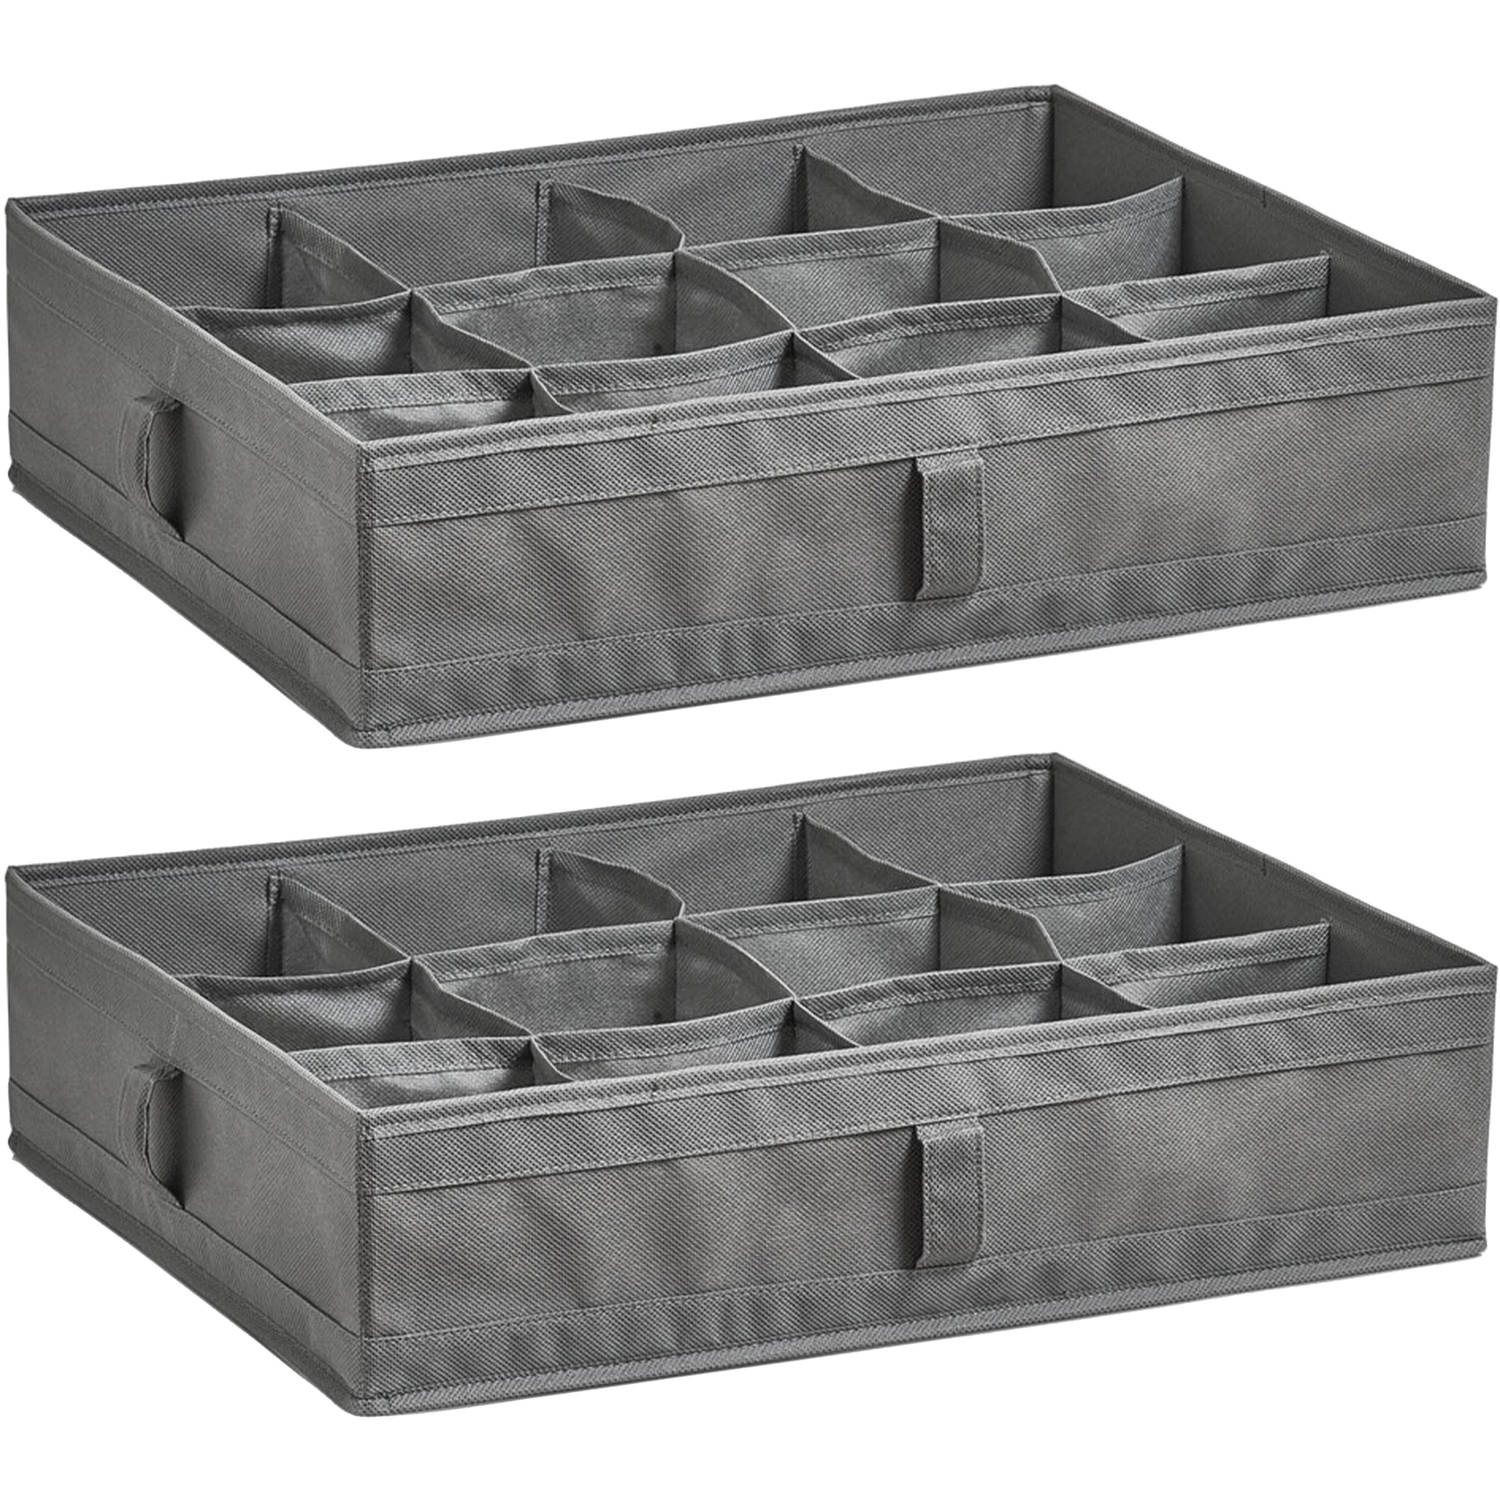 Kleding-kast organizer 2x 12 vakken grijs 44 x 34 x 11 cm polyester Opbergmanden